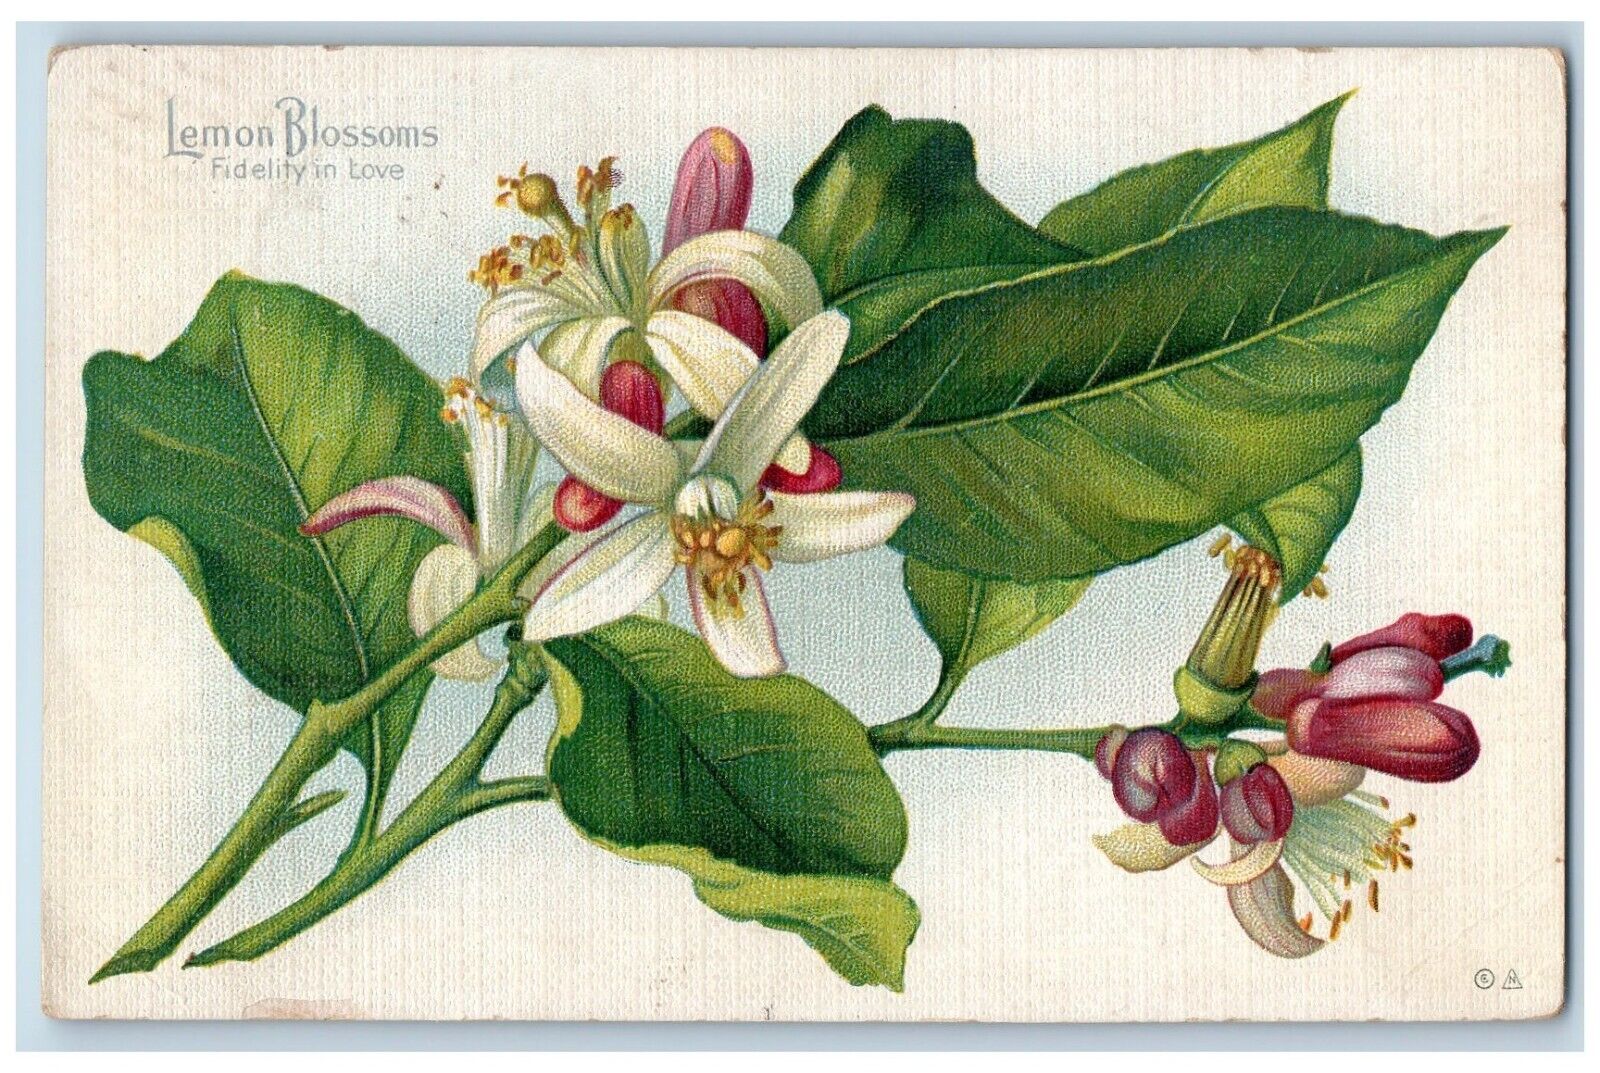 Language Of Flowers Romance Postcard Lemon Blossoms Fidelity In Love Bluffton OH